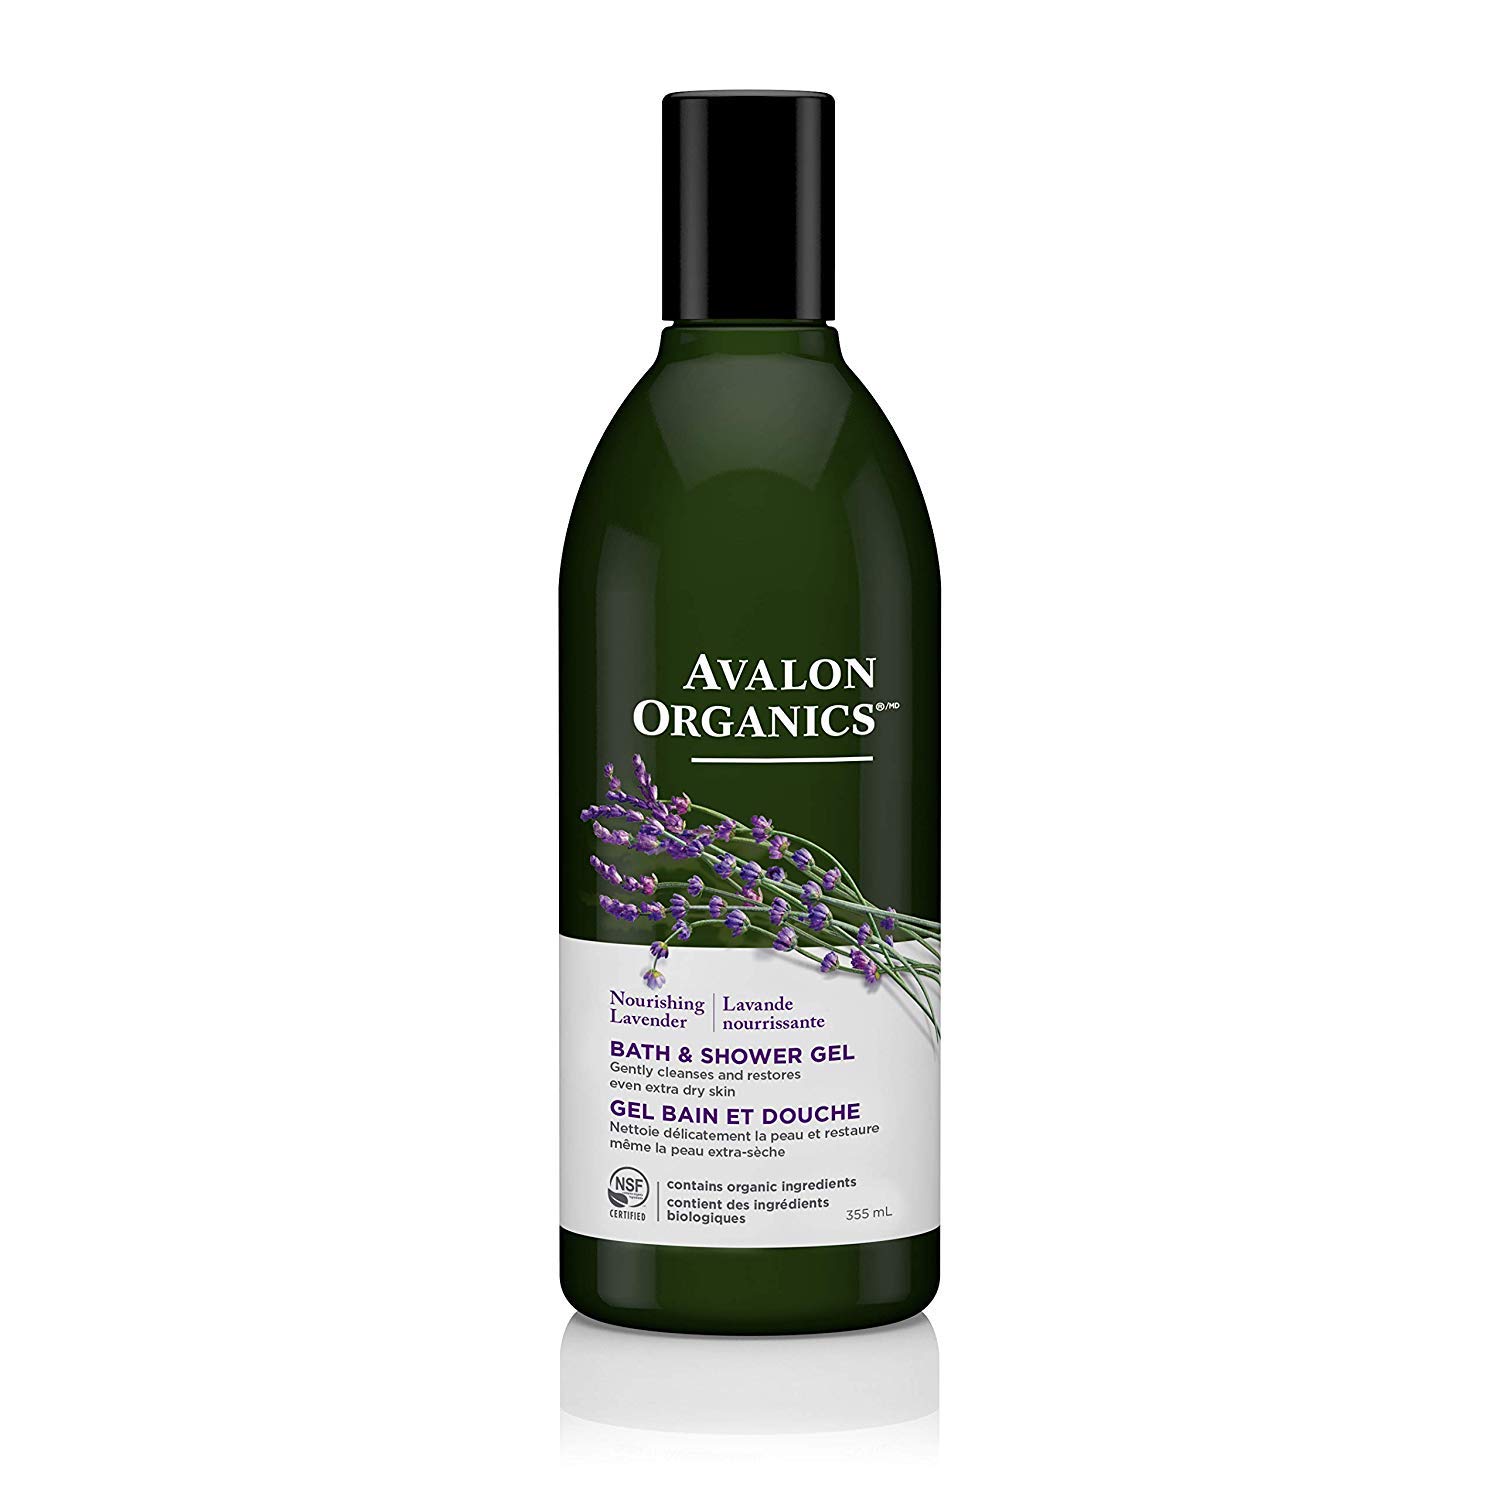 Avalon Organics Bath & Shower Gel, Nourishing Lavender, 12 Oz